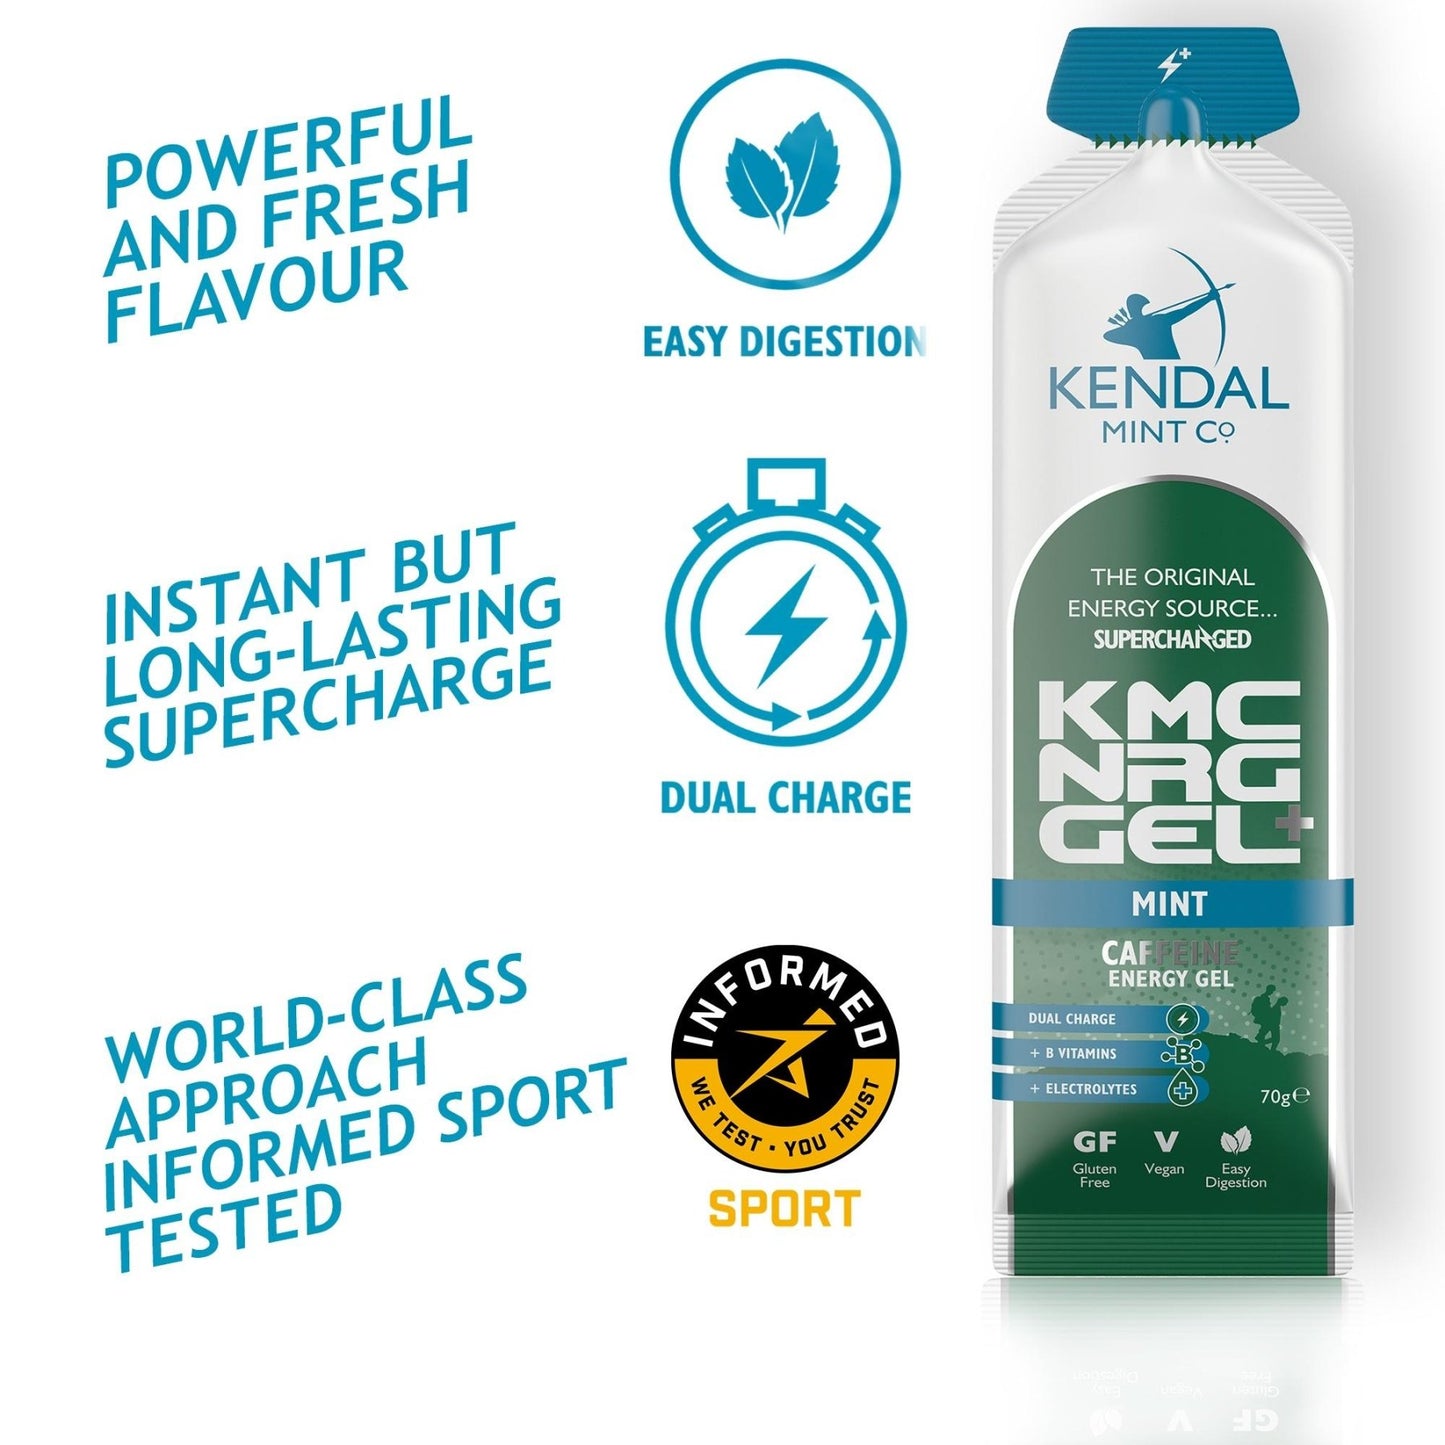 KMC NRG GEL+ Mint Caffeine Energy Gel 70g - KMC NRG GEL - Kendal Mint Co® - 12 x 70g